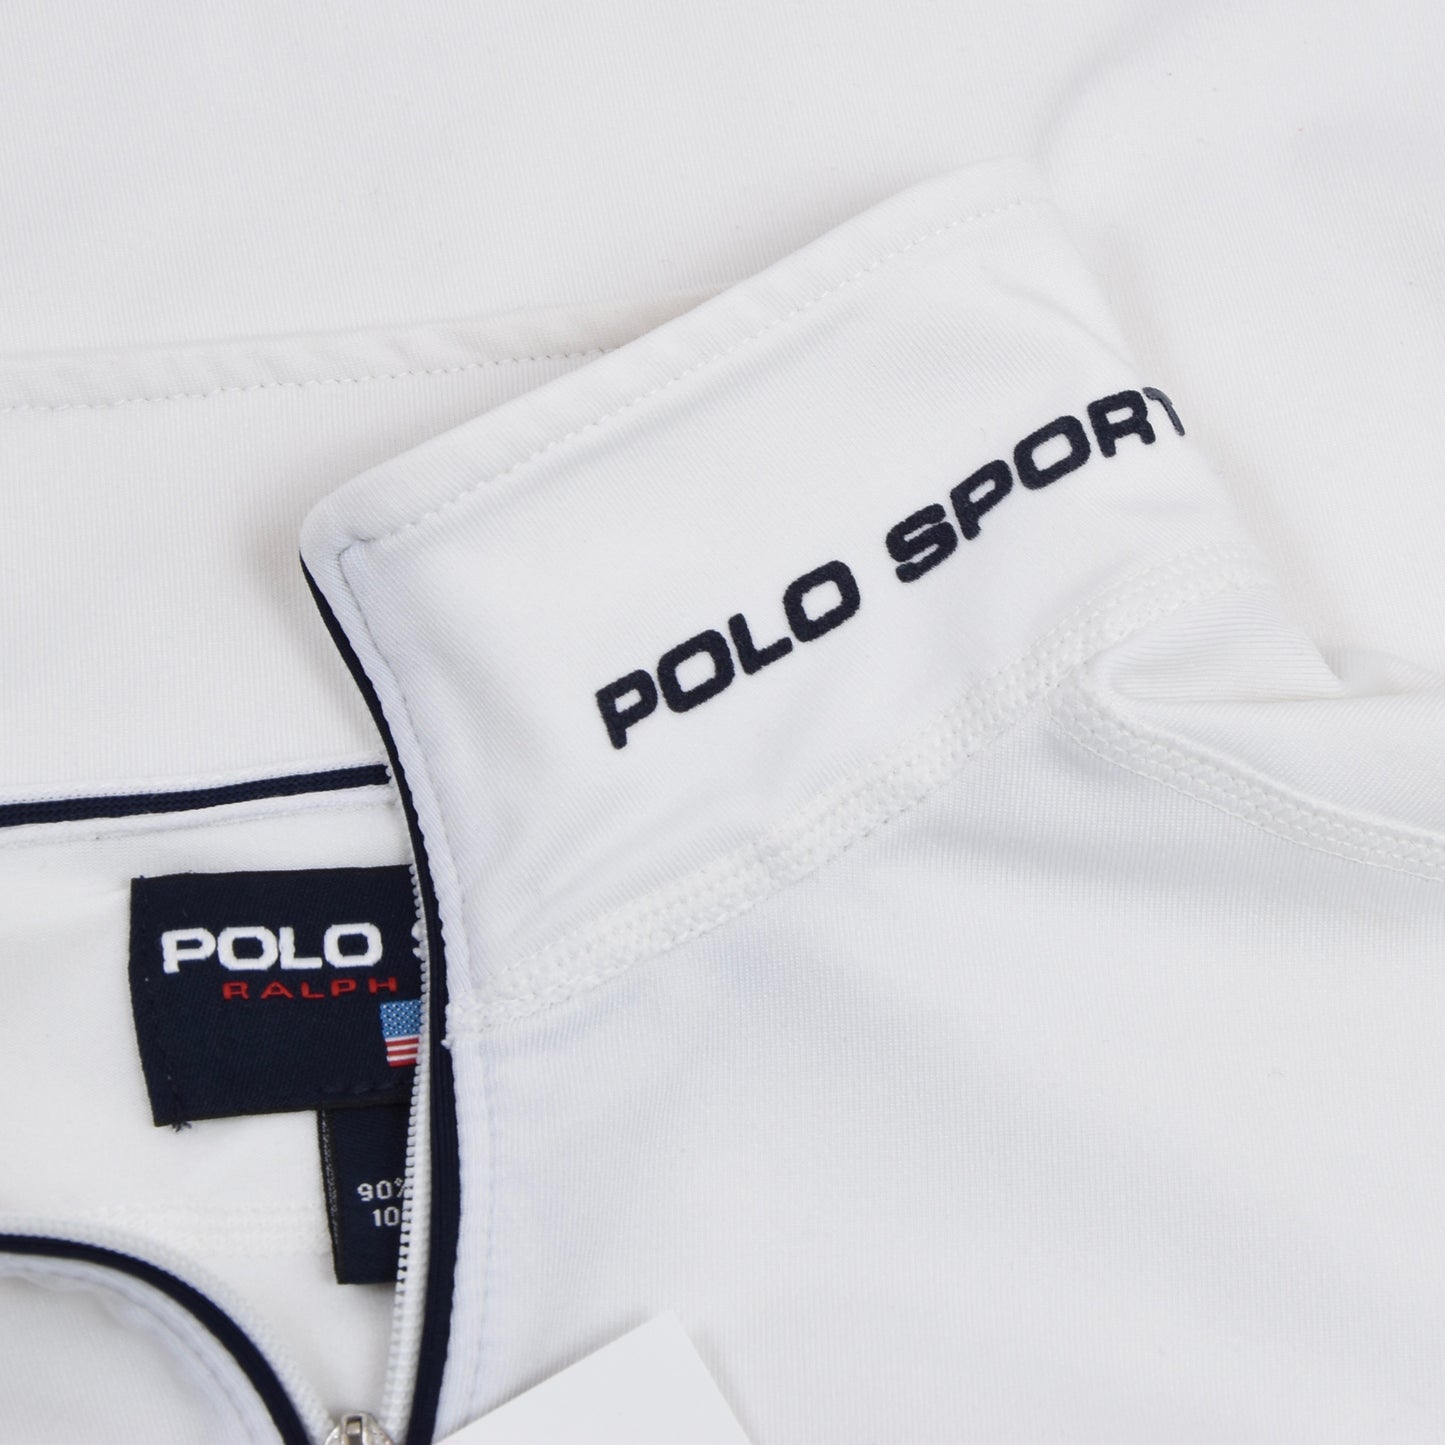 Vintage Polo Sport 1/4 Zip Spandex Shirt Size M - White